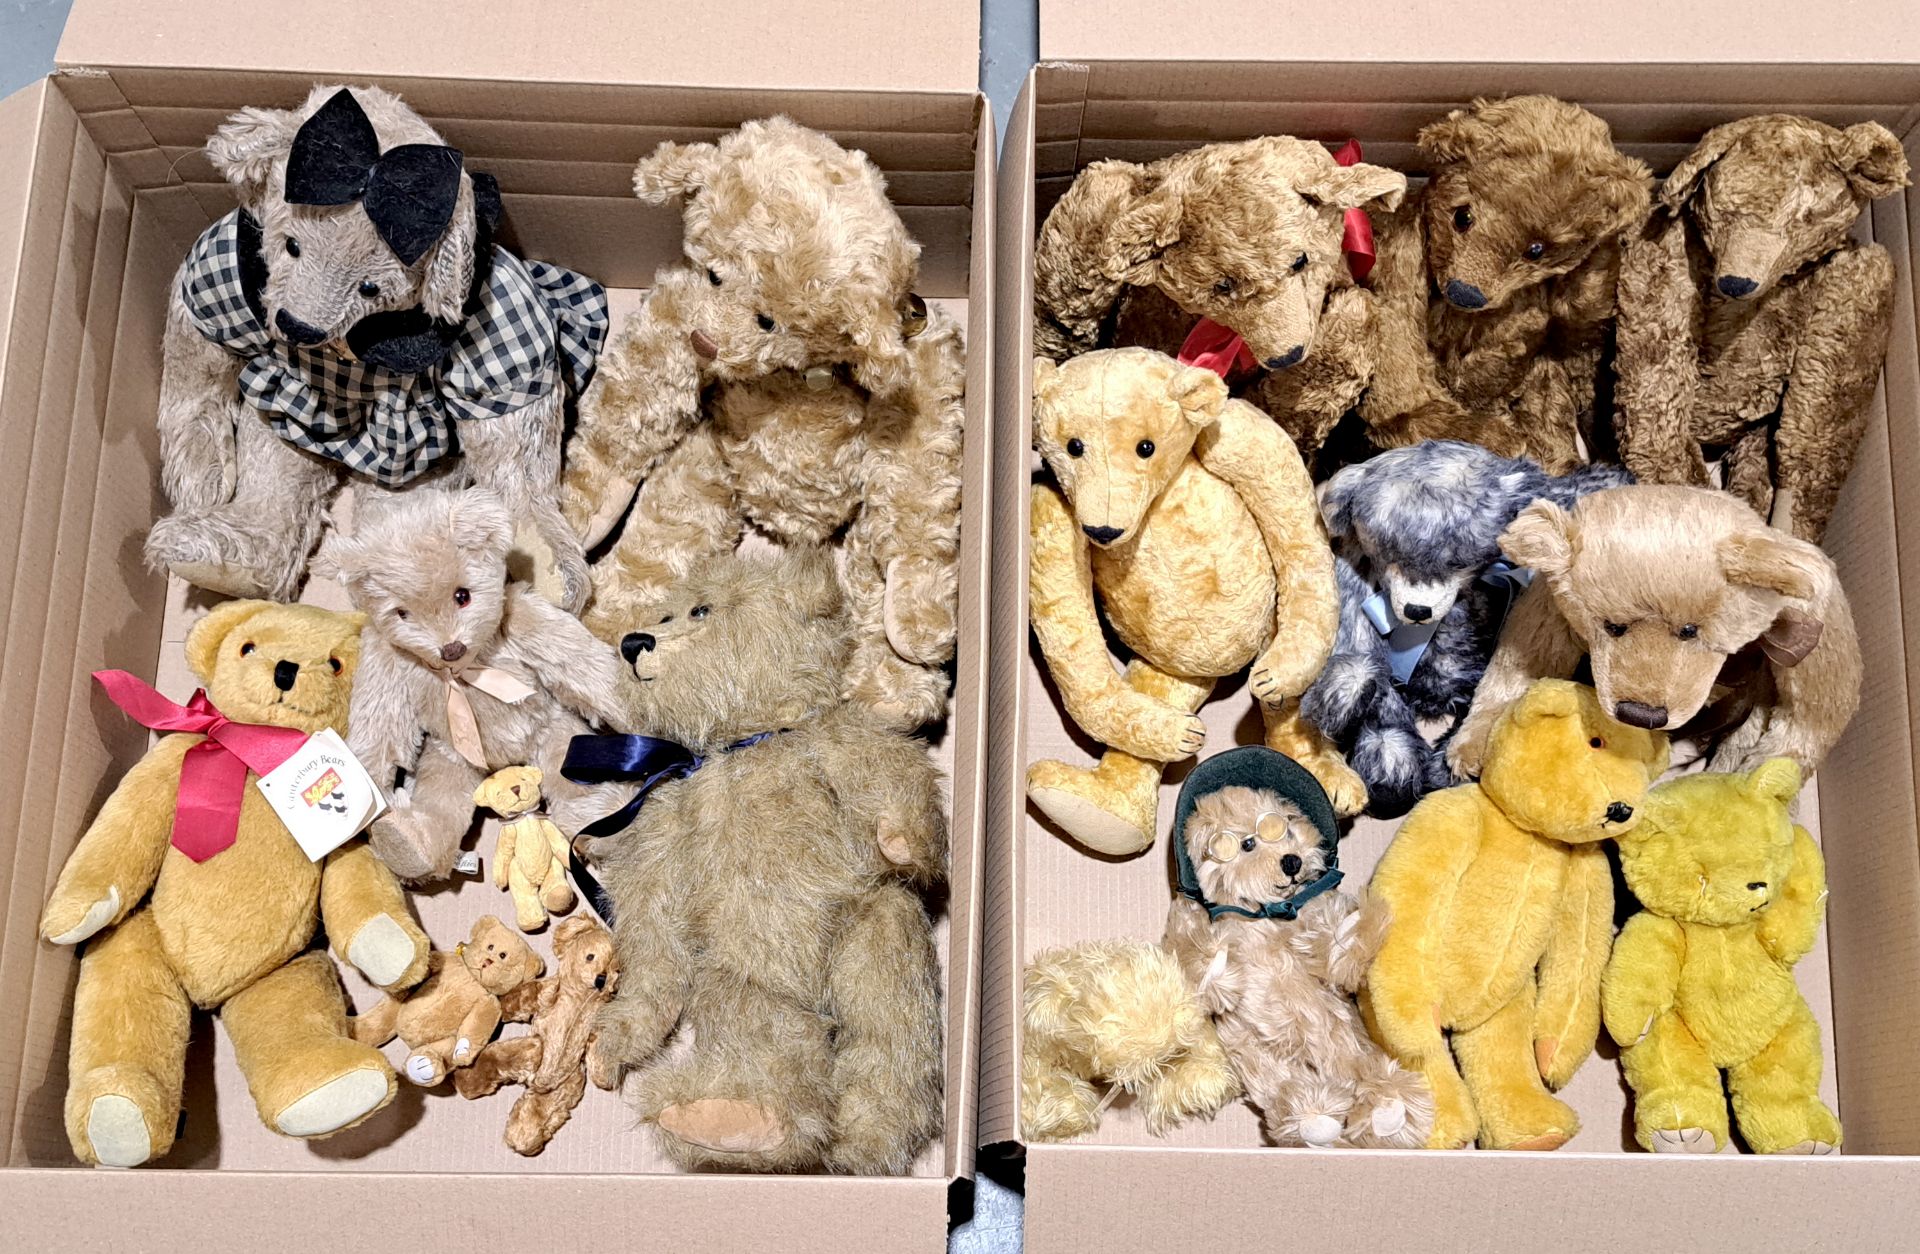 Assortment of teddy bears including artist bears